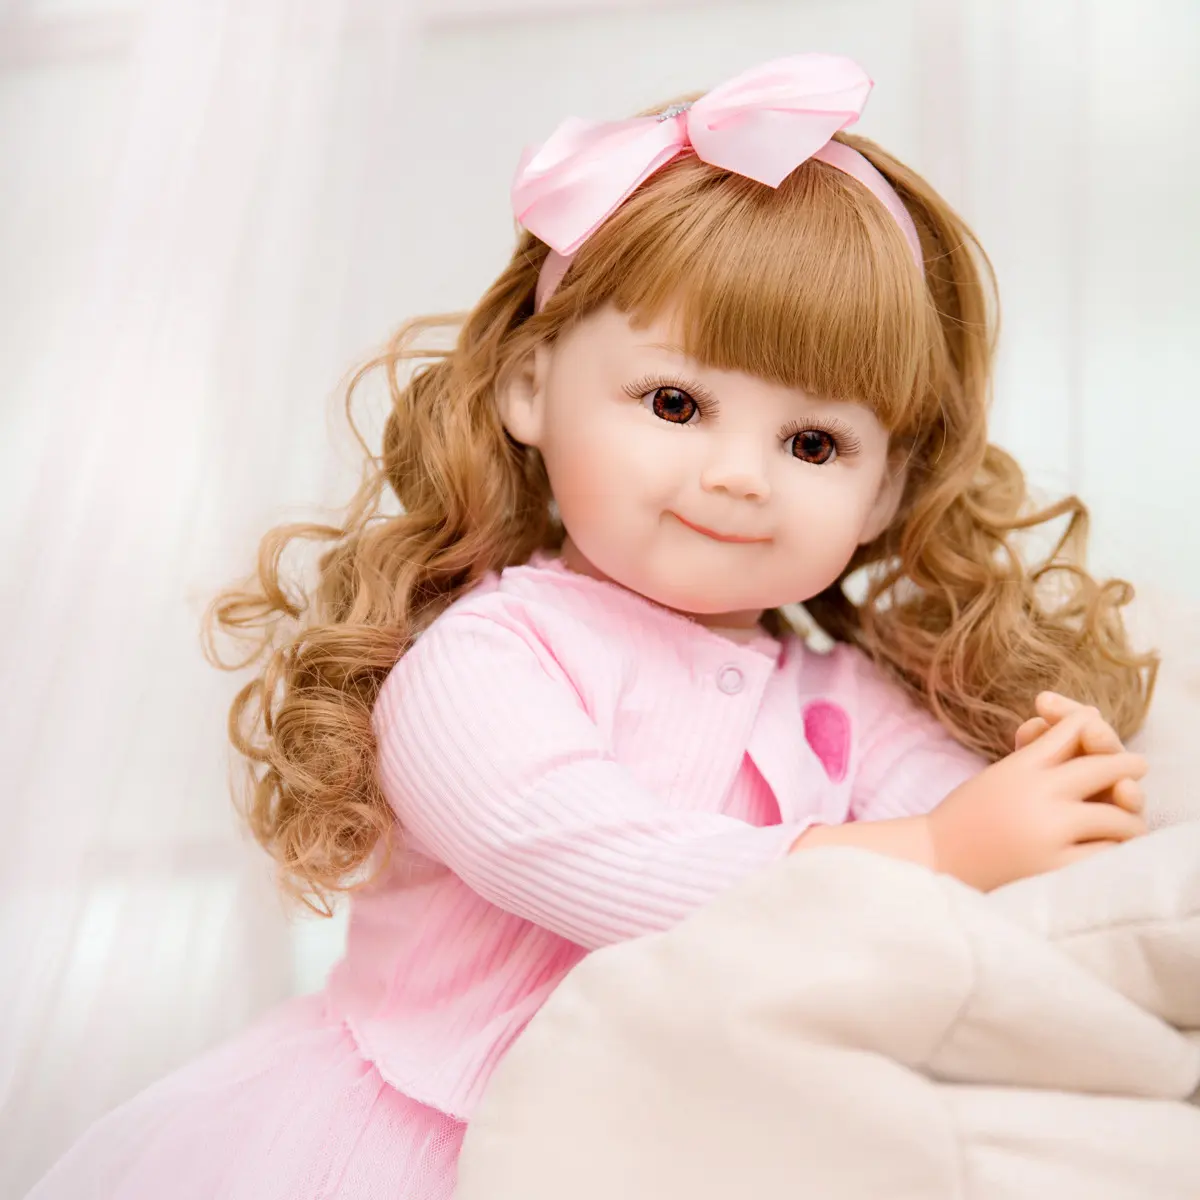 Cheap Lifelike Newborn Baby Doll Soft Silicone Real Reborn Bebe Doll Vinyl Realistic Bonecas Reborn Bebe for Kids Girls Toy